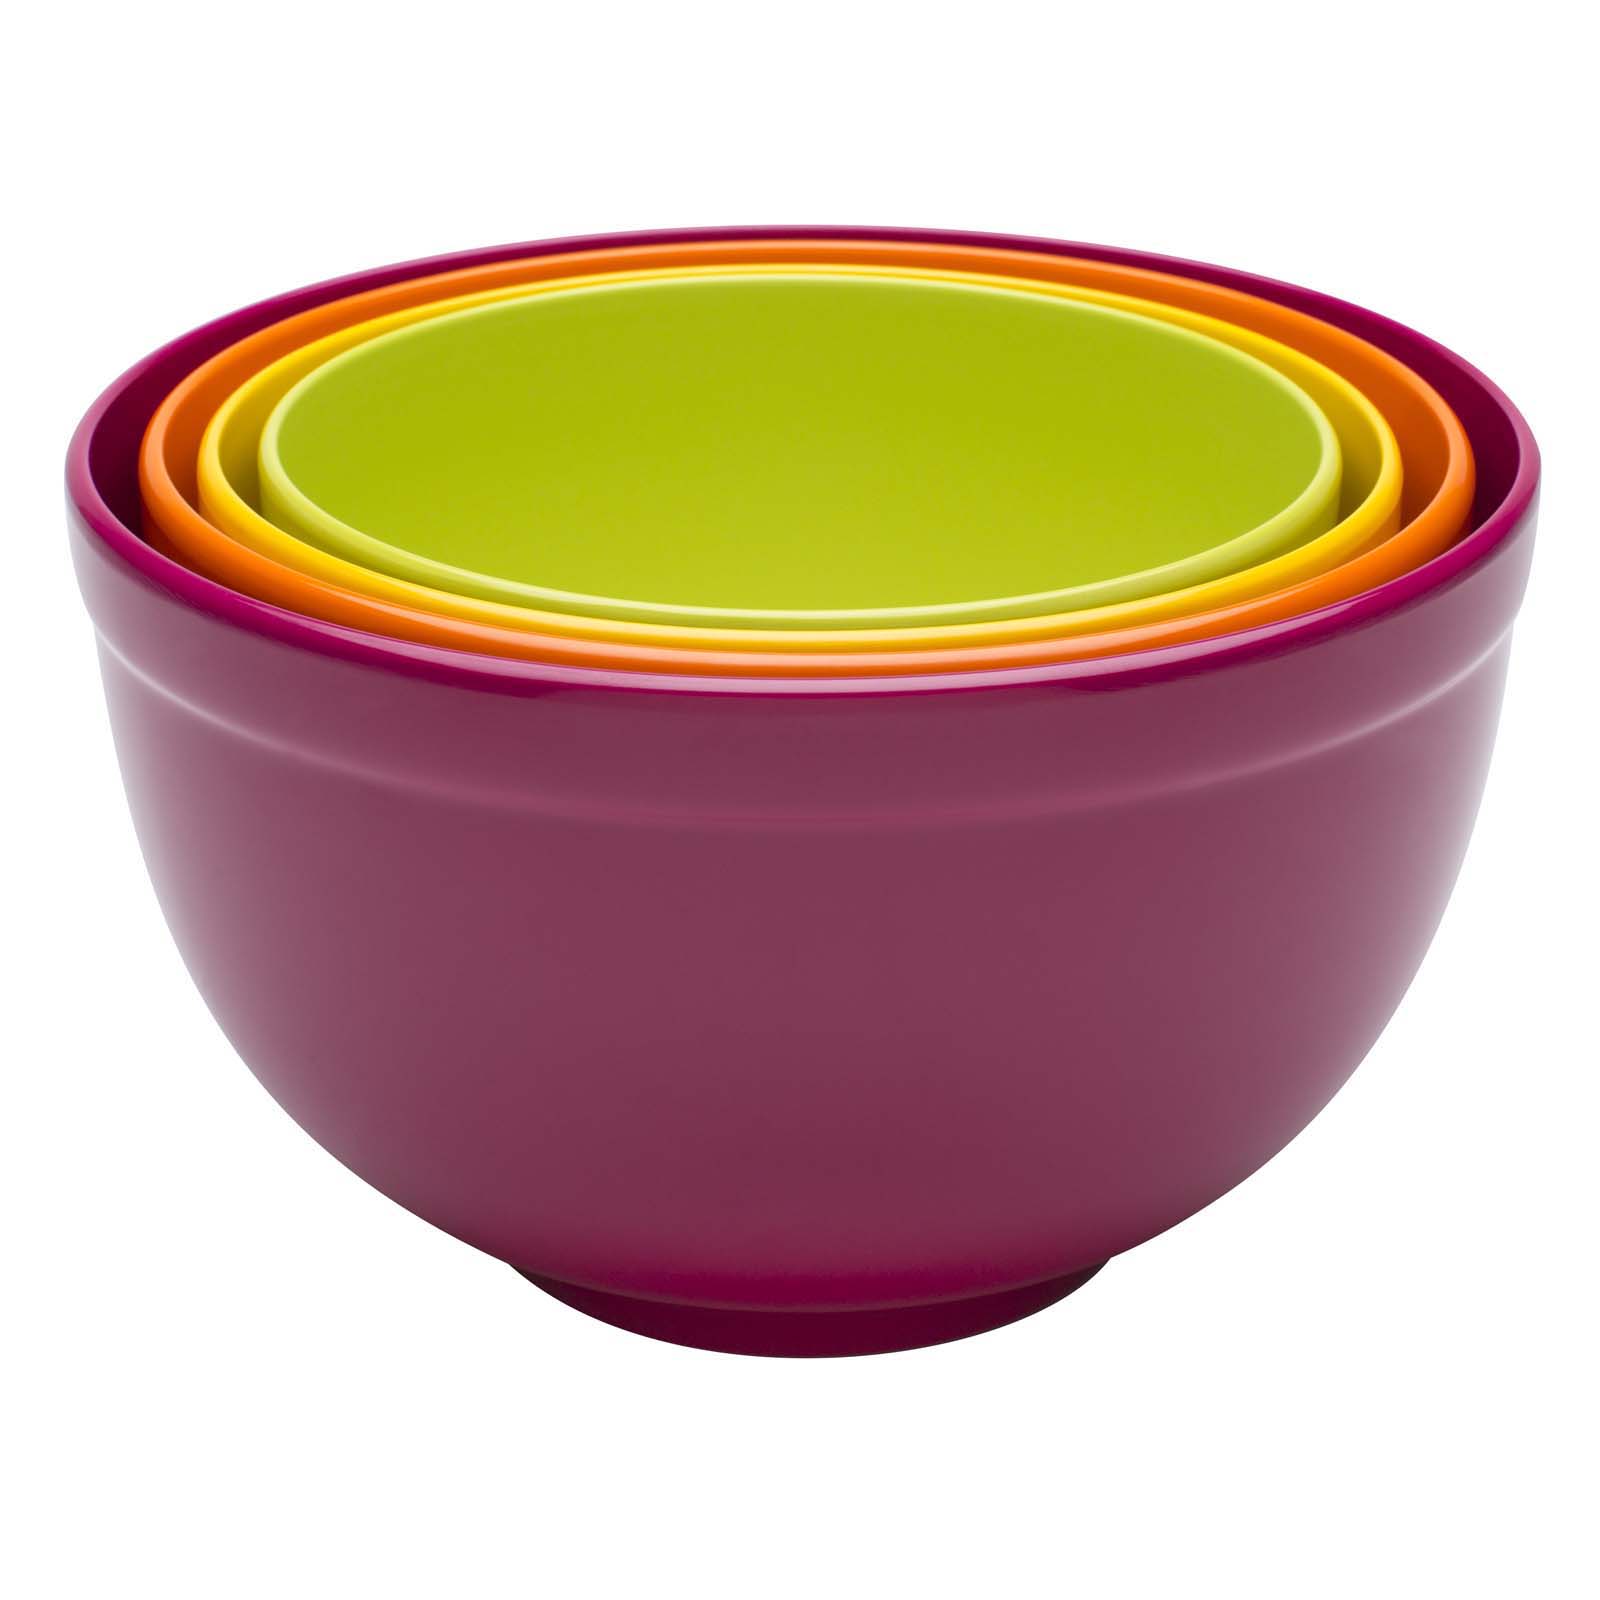 Colorful Mixing Bowl Set by Zak Designs